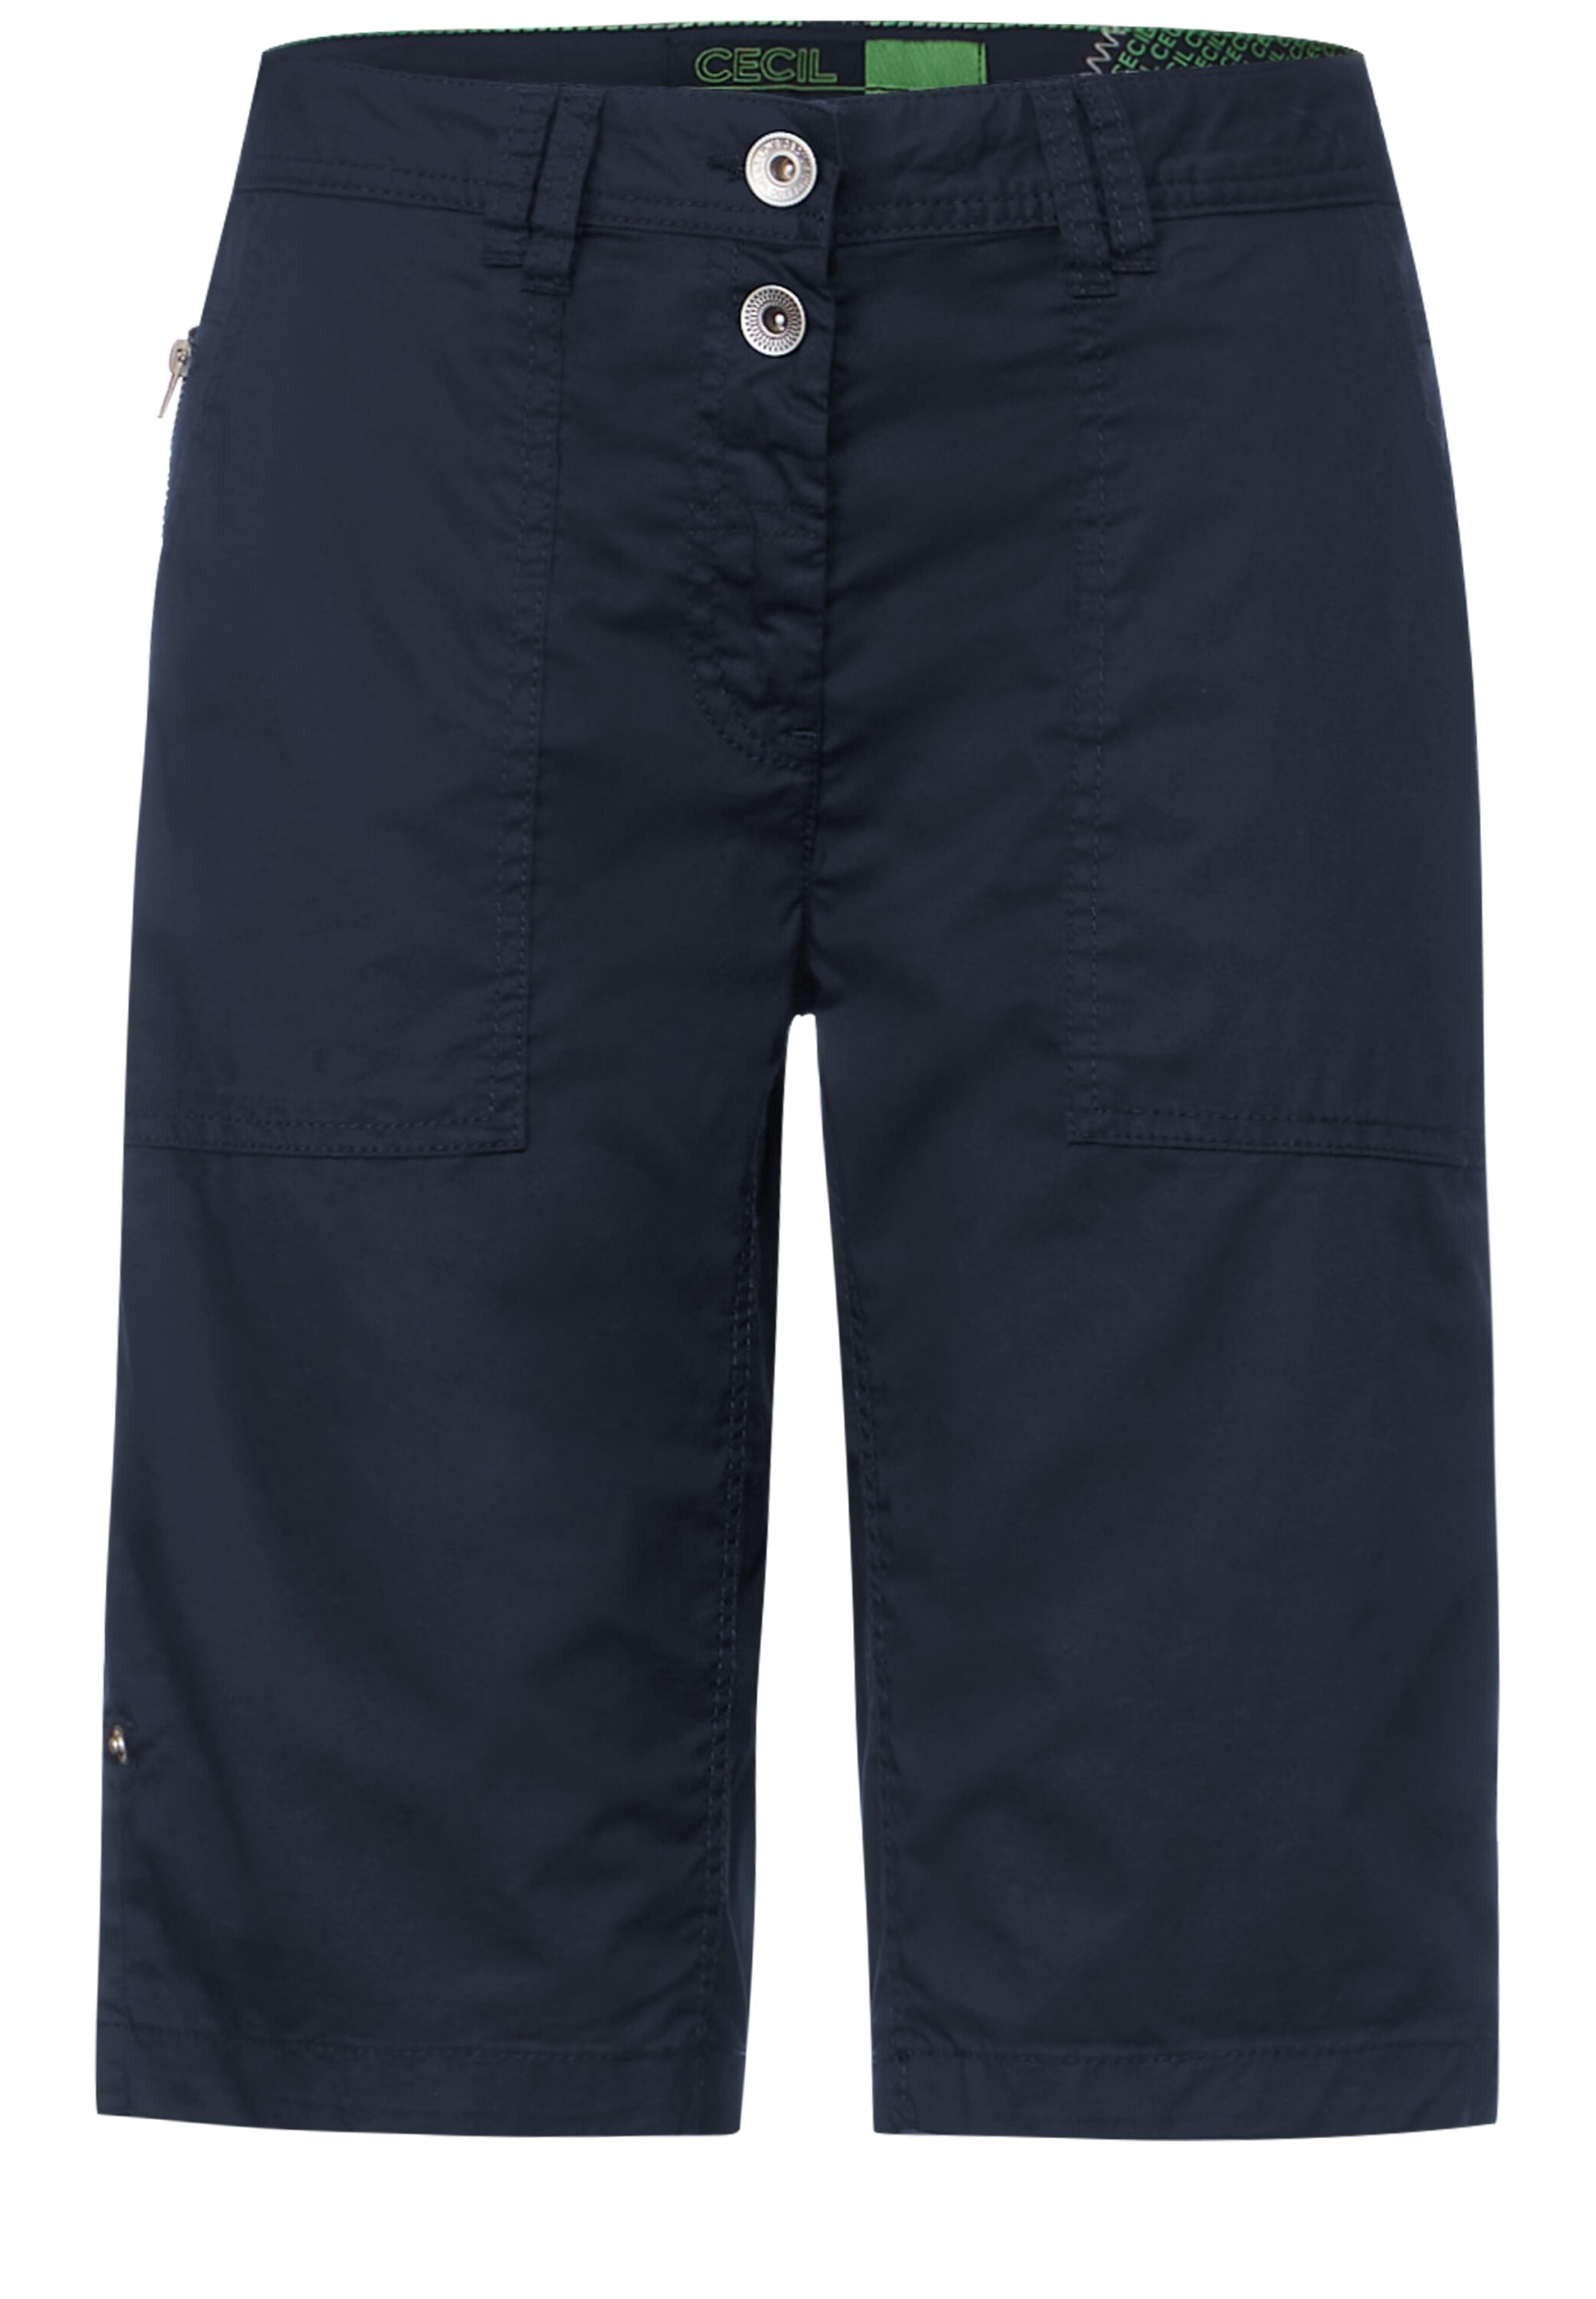 Shorts deep | B376478-10128-33 York blue | Style New 33 NOS |